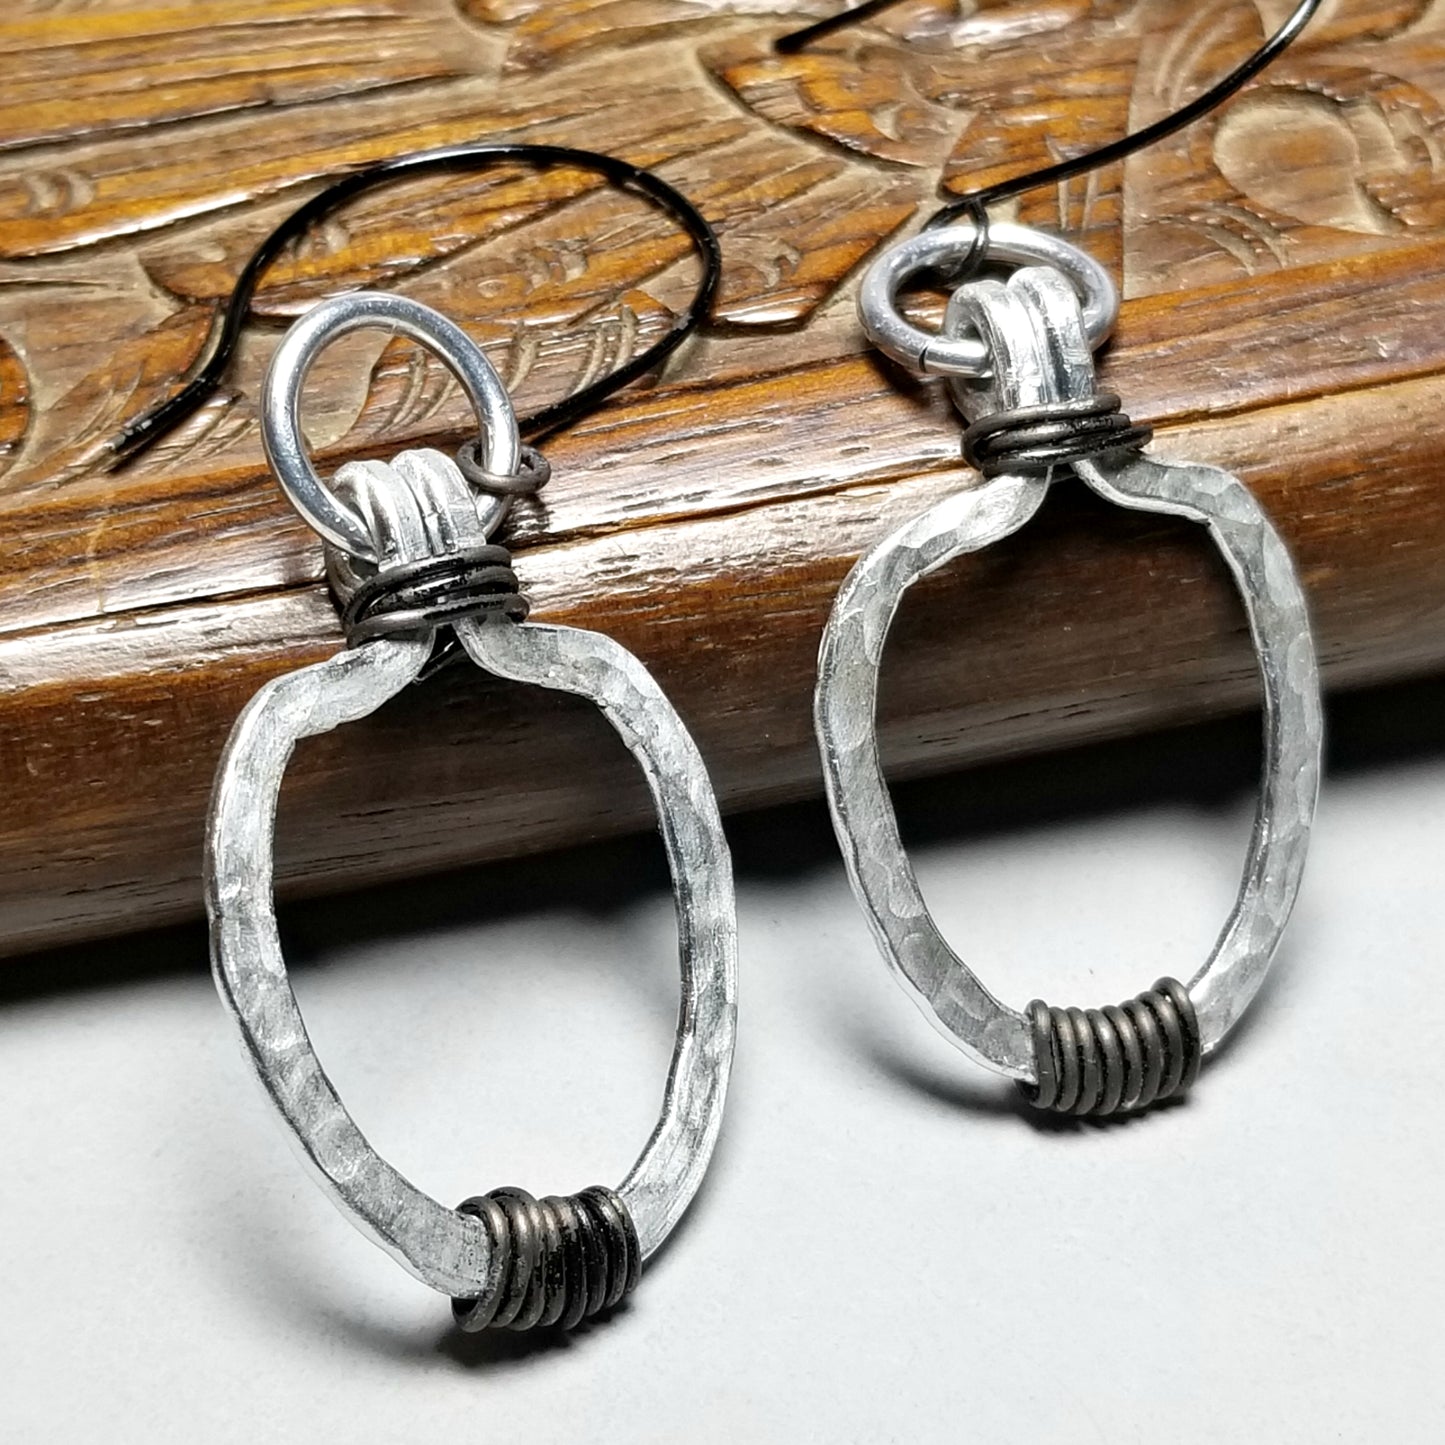 Hammered Aluminum Earrings, Aluminum Wire Jewelry